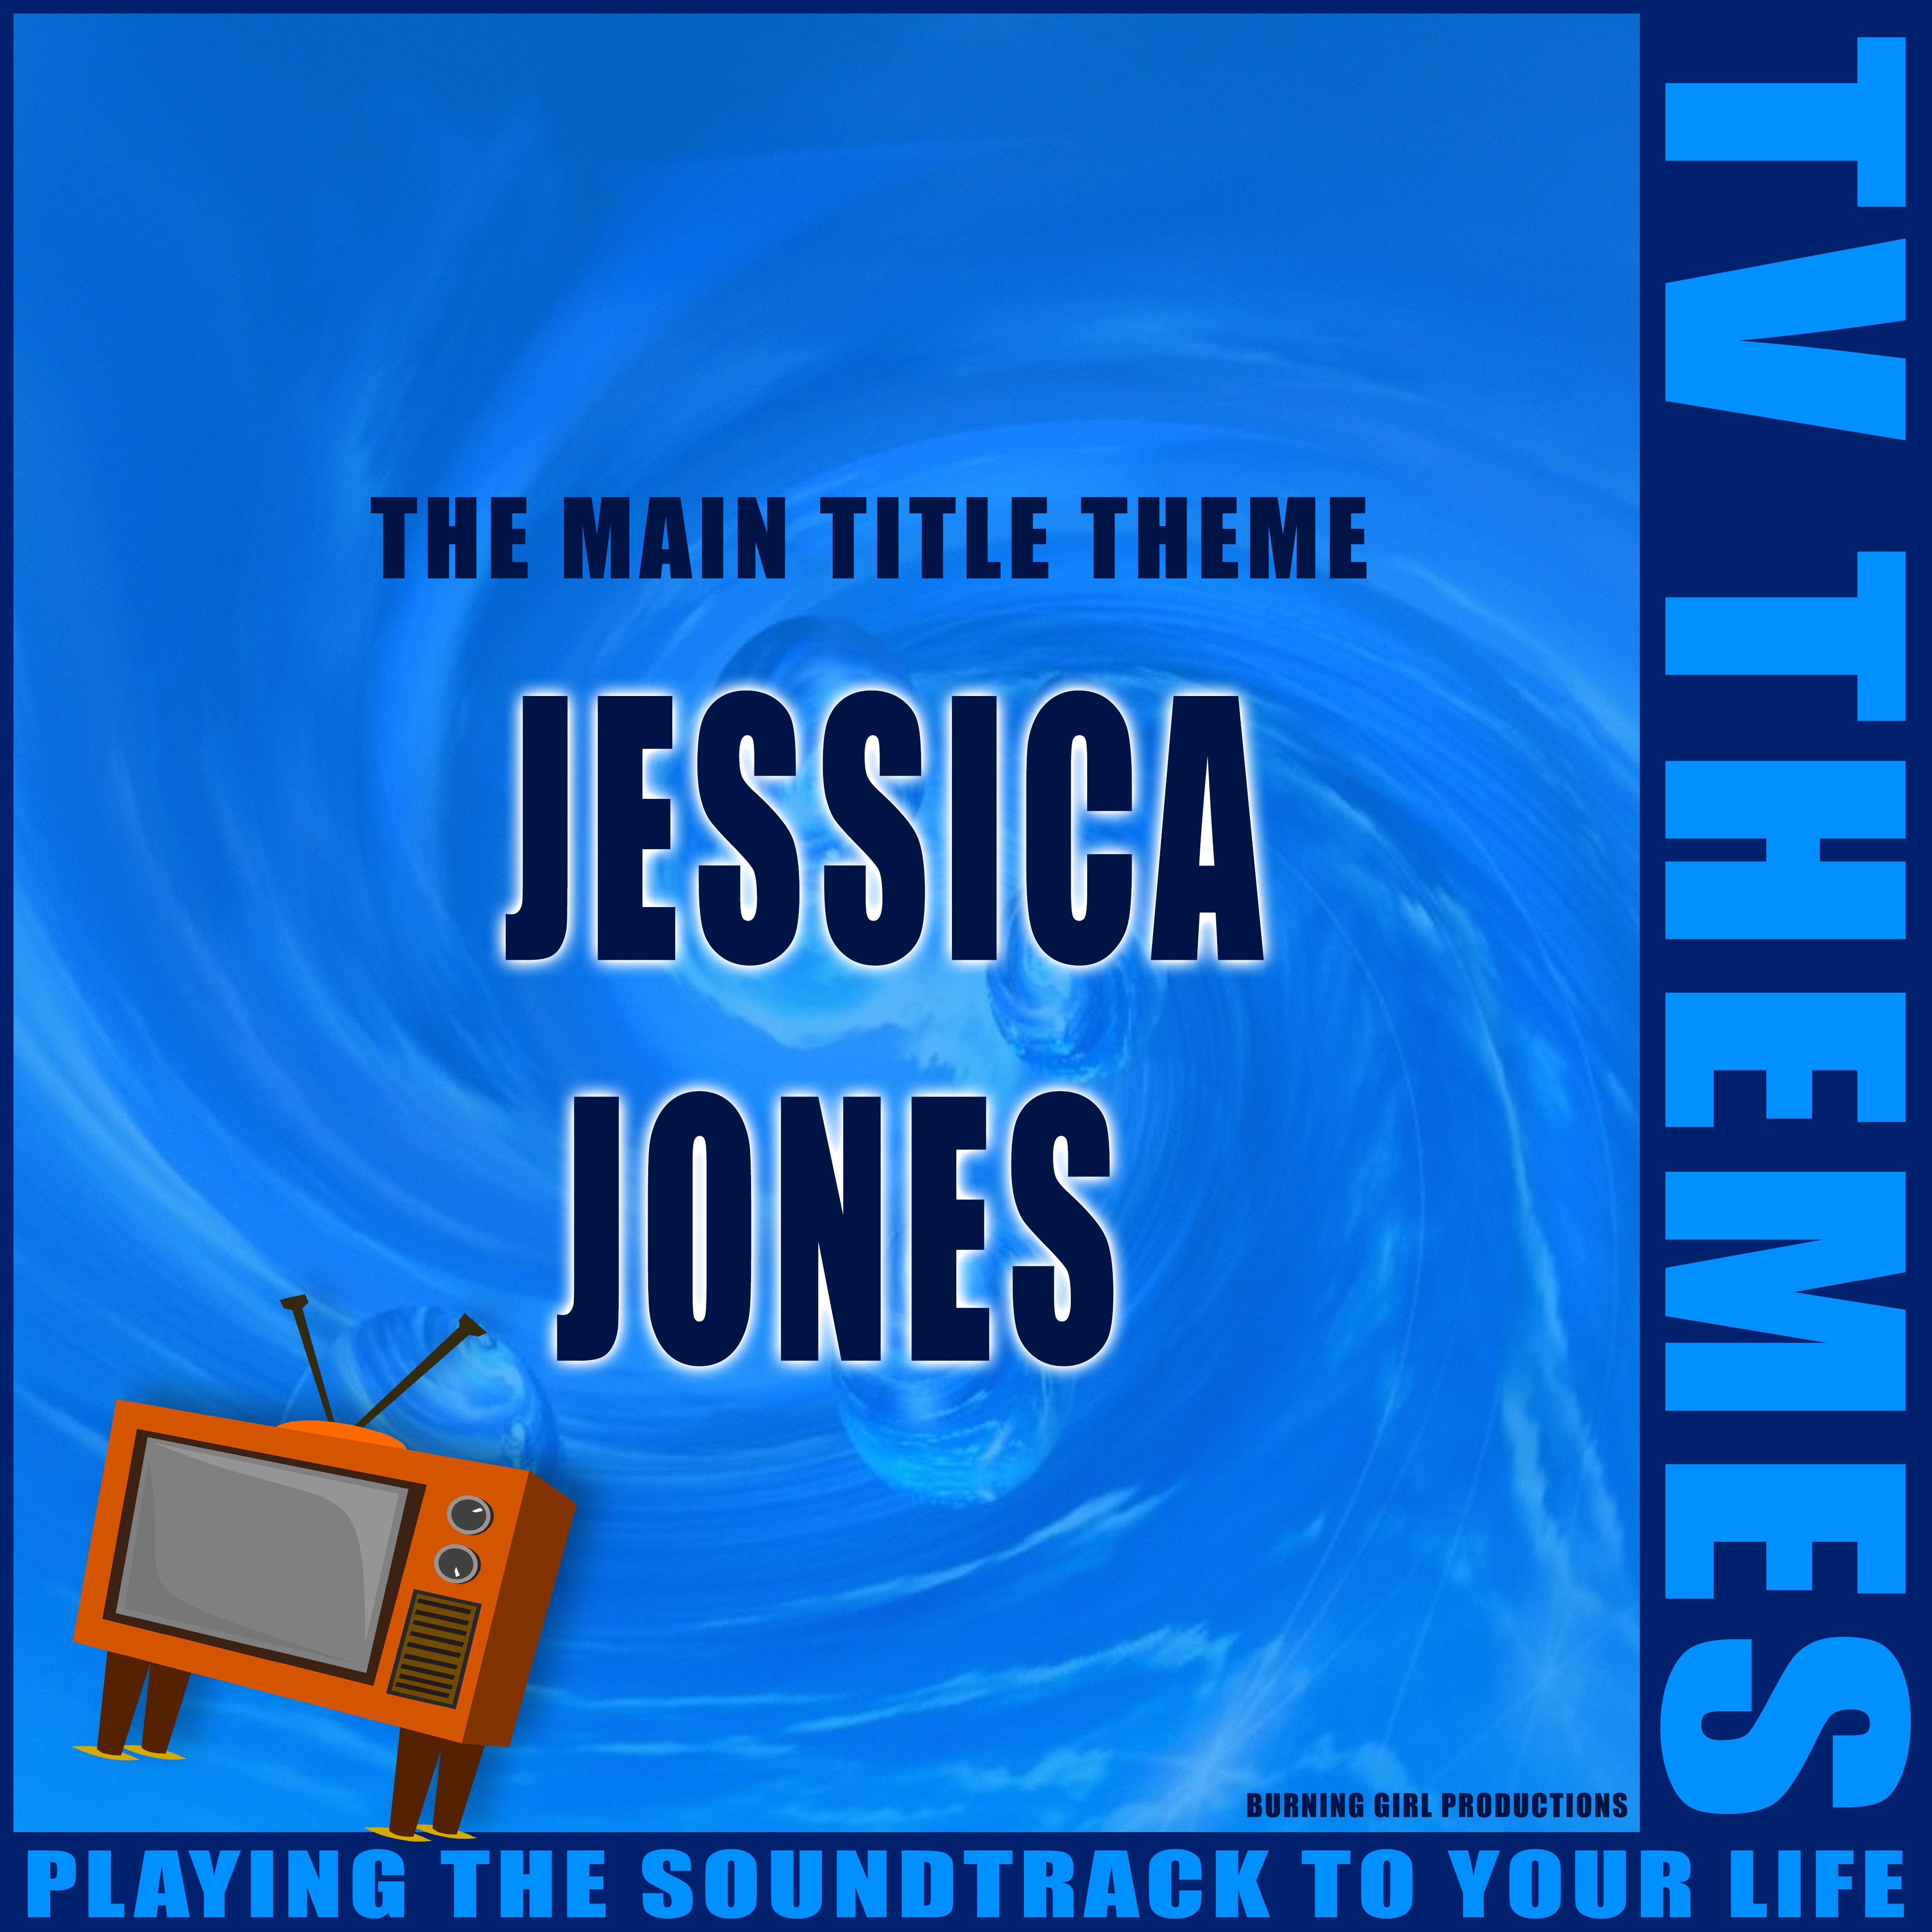 The Main Title Theme - Jessica Jones